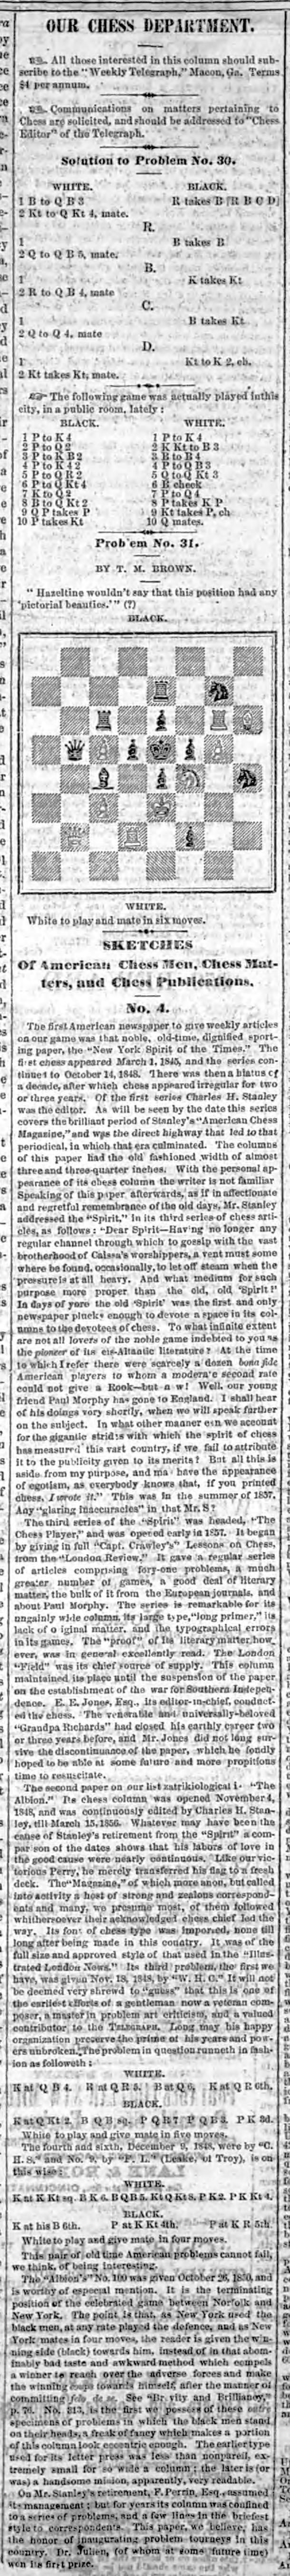 1867.03.22-01 Macon Georgia Weekly Telegraph.jpg